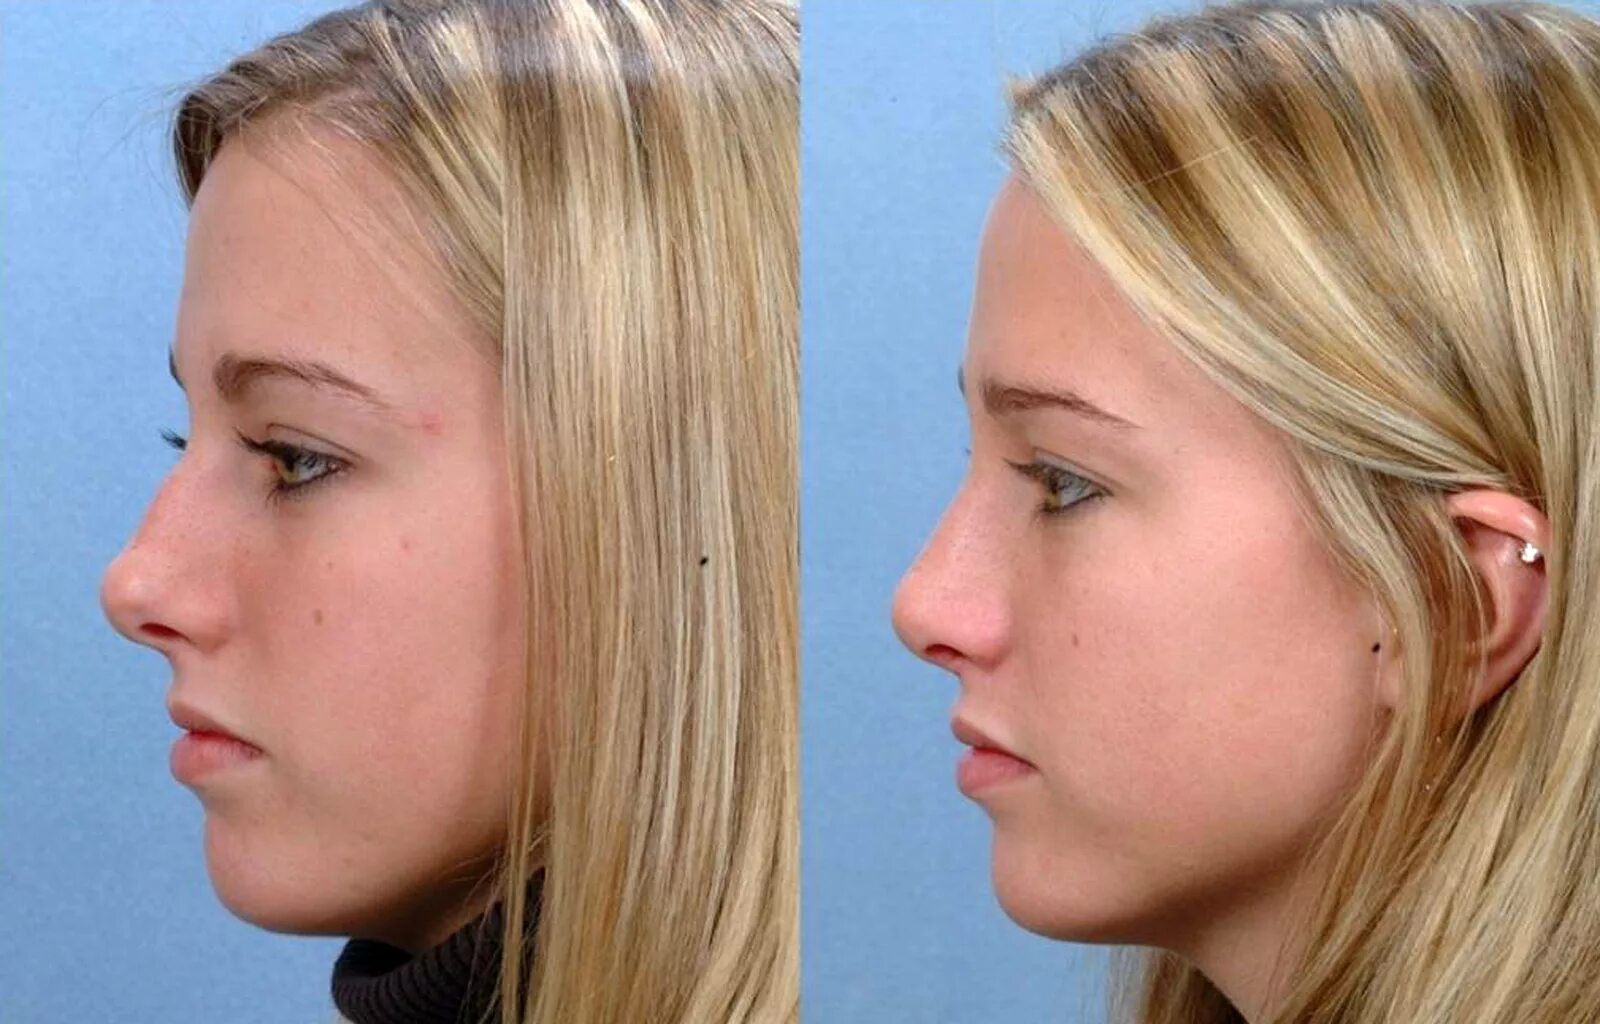 Ринопластика Эленшлегер. Пластика носа. Ринопластика носа. Пластическая операция на нос до и после.